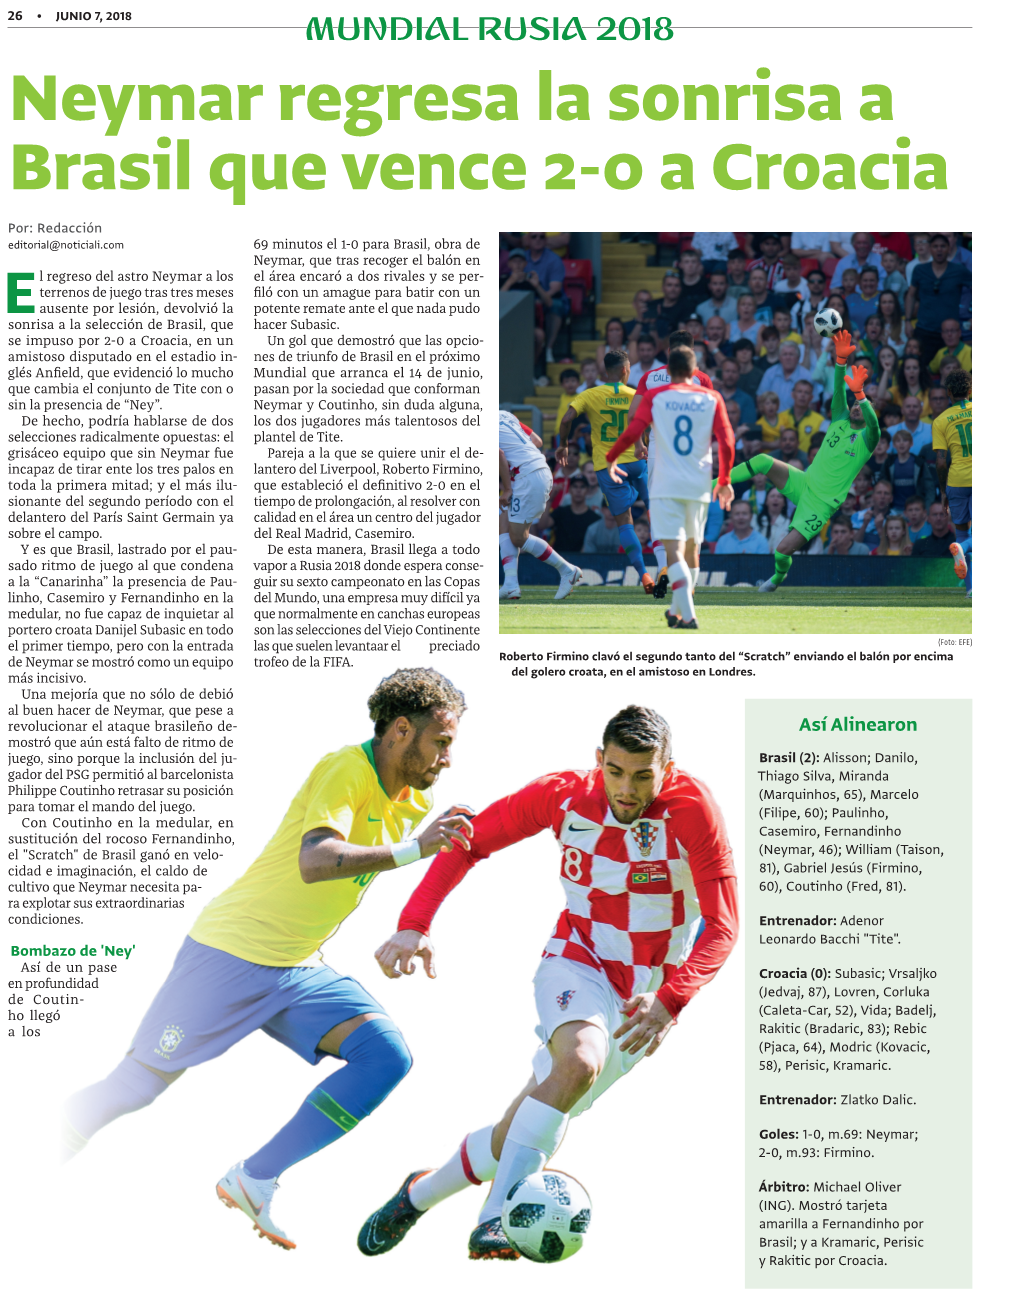 Neymar Regresa La Sonrisa a Brasil Que Vence 2-0 a Croacia